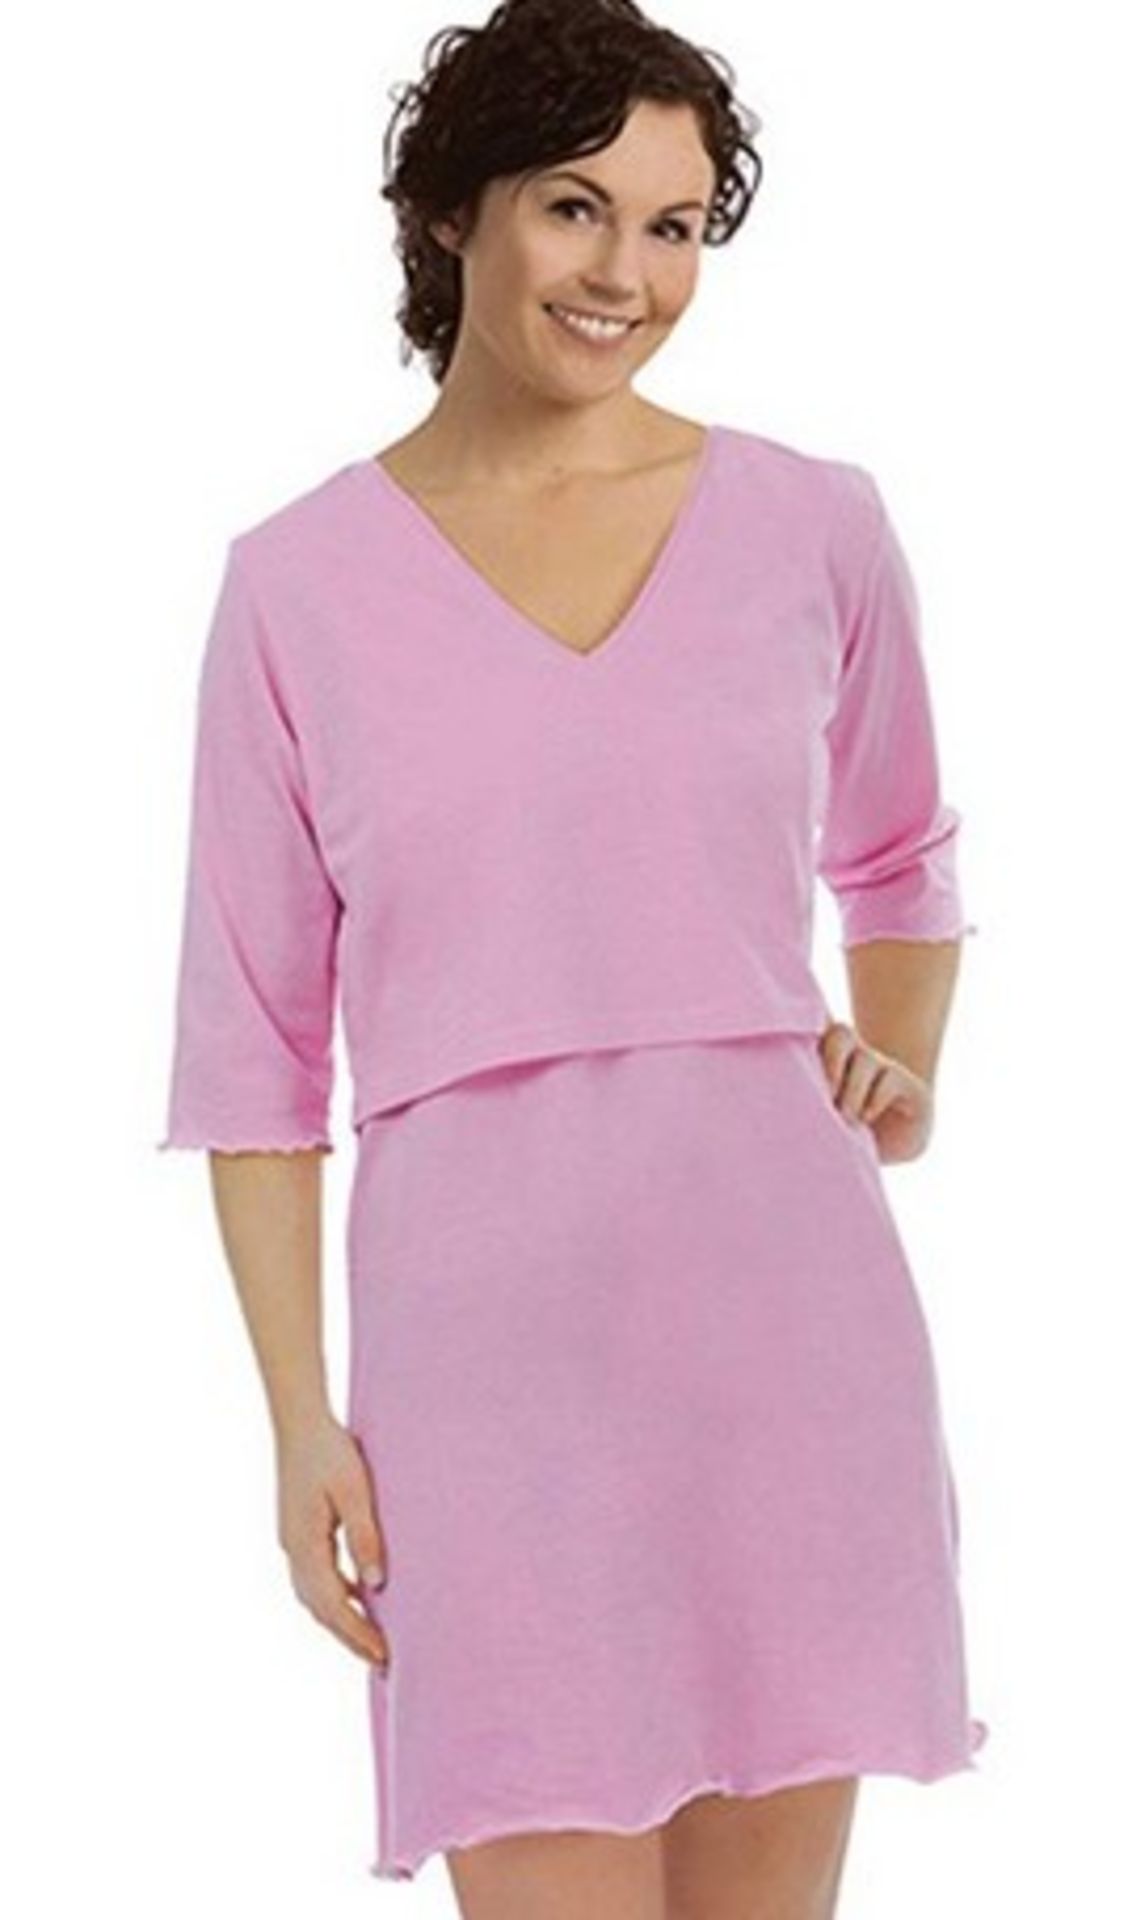 Brand New Carriwell Sarah Nursing Sleep Shirt (XXL, Light Pink)RRP £25.99